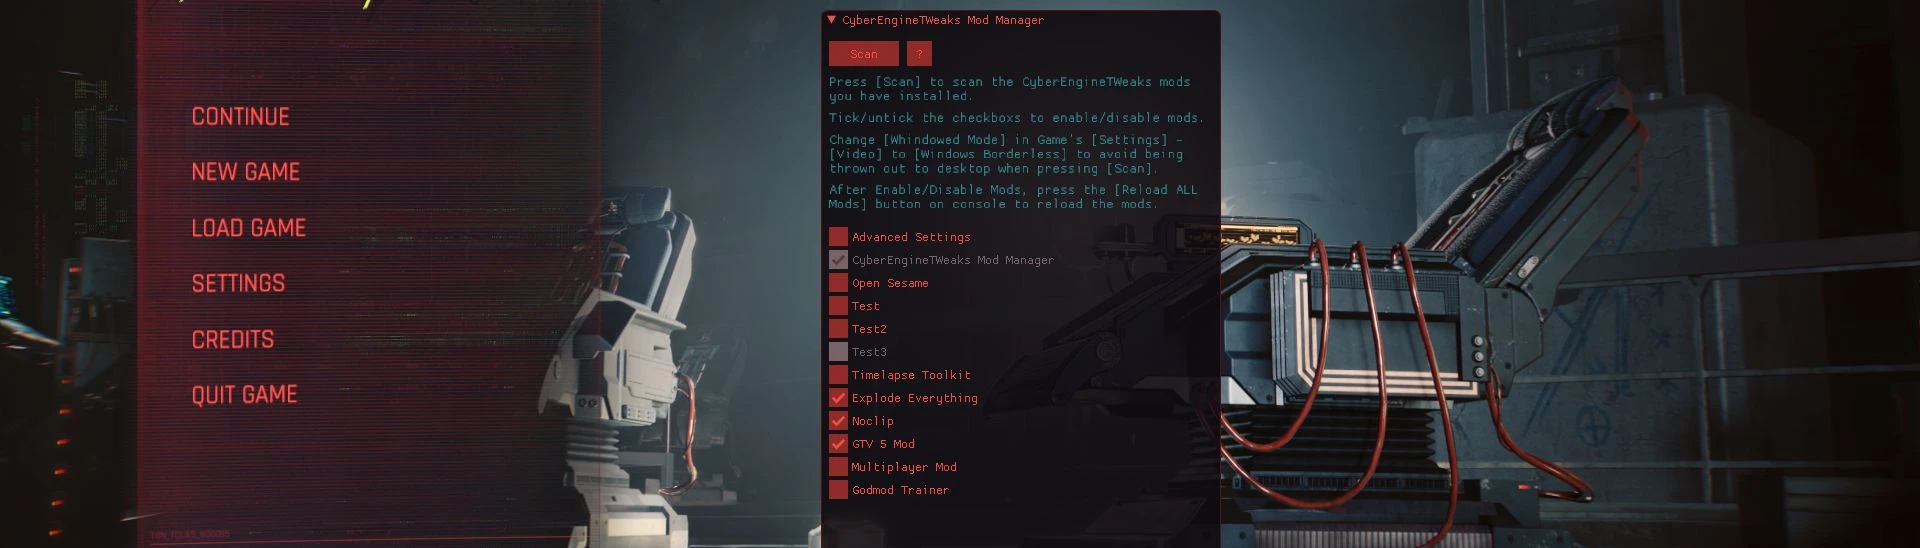 Cyber Engine Tweaks at Cyberpunk 2077 Nexus - Mods and community